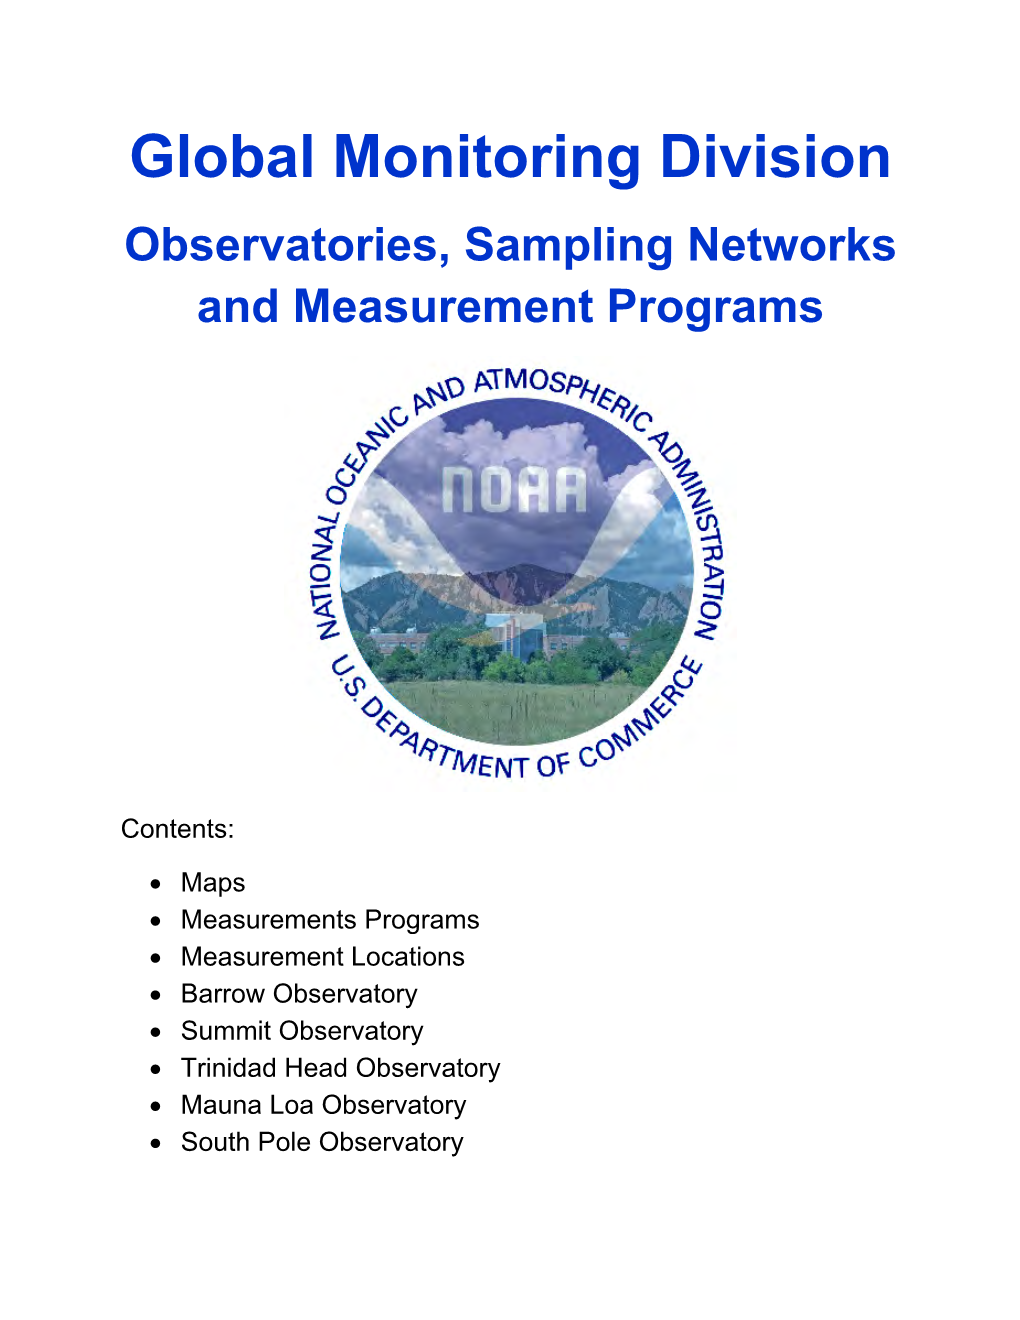 Global Monitoring Division Observatories, Sampling Networks and Measurement Programs